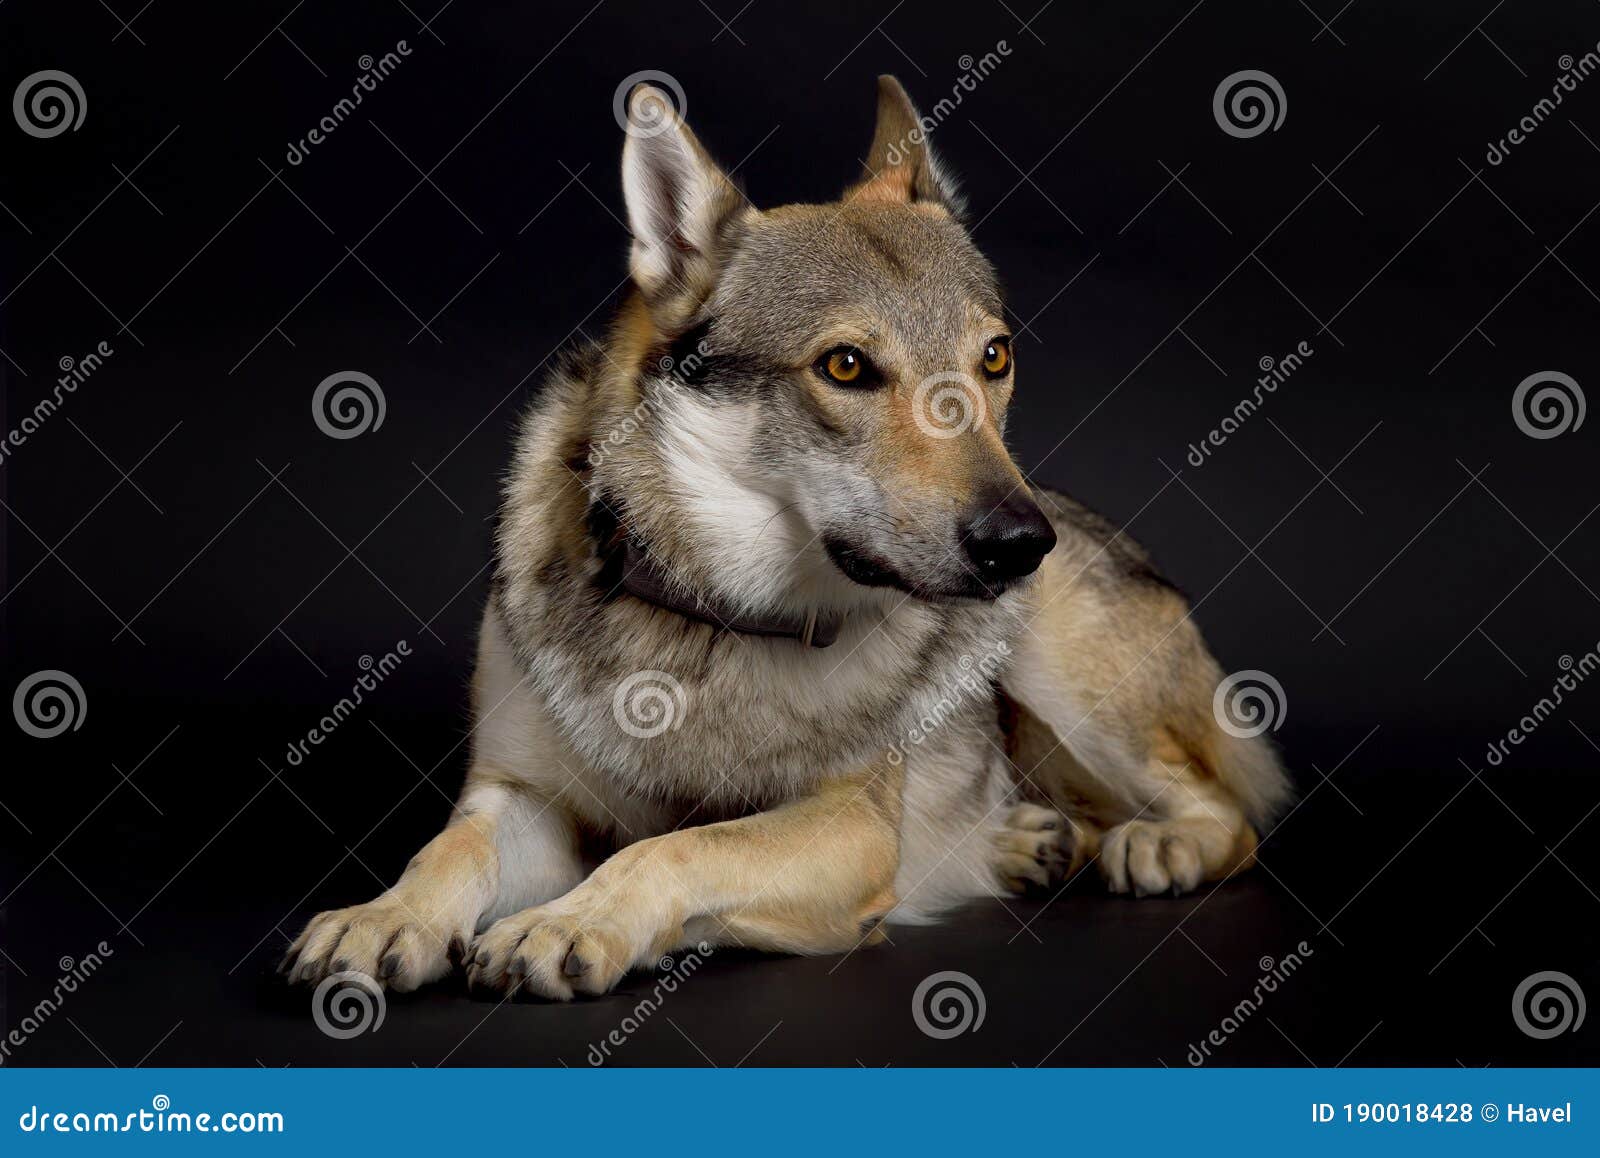 35 Teeth Czechoslovakian Wolfdog Photos Free Royalty Free Stock Photos From Dreamstime